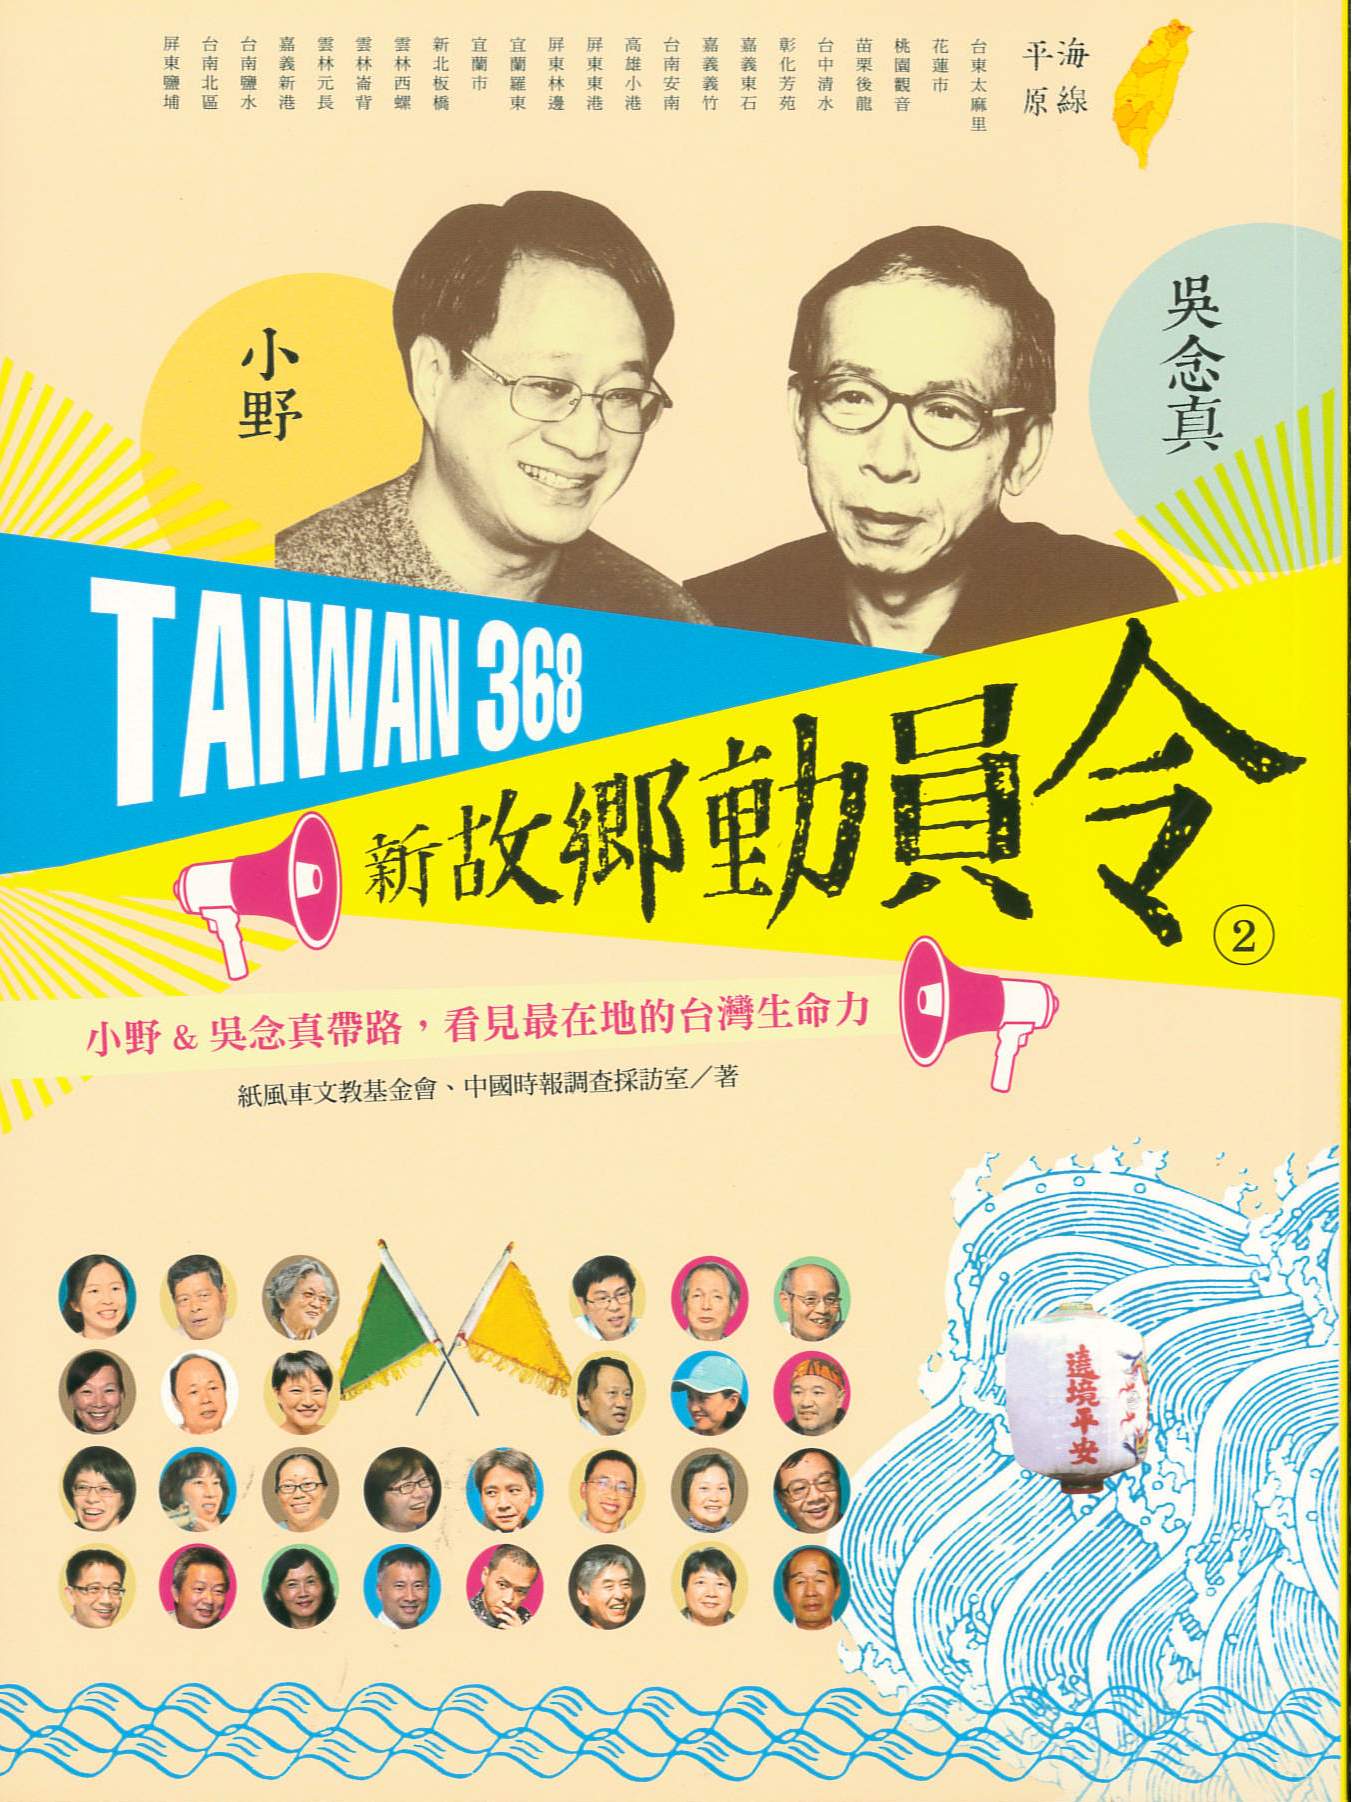 TAIWAN 368 新故鄉動員令(2) : 小野&吳念真帶路, 看見最在地的台灣生命力 /